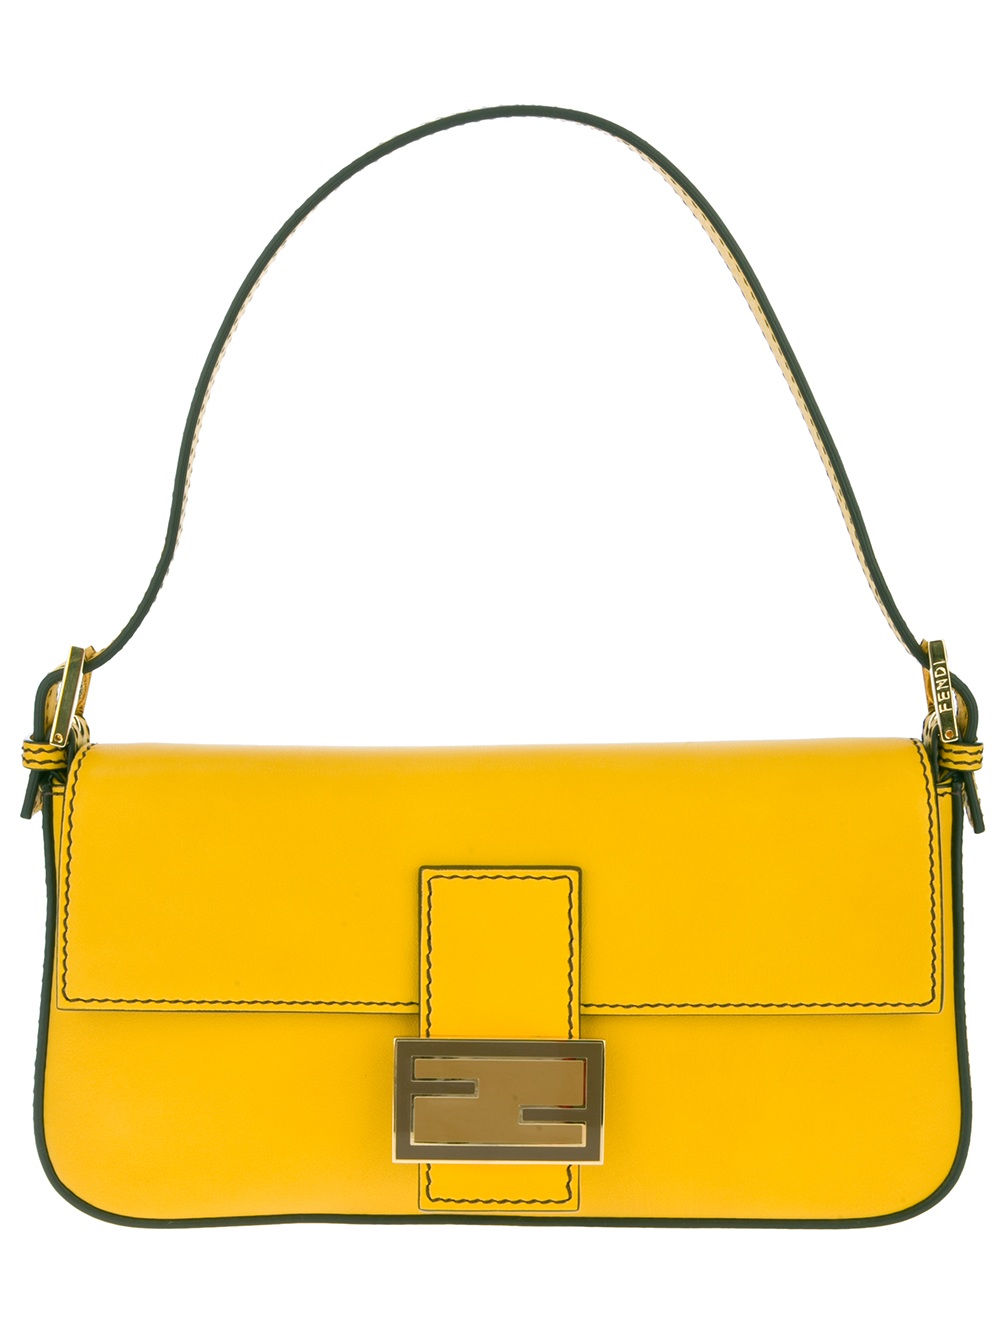 Fendi Baguette Bag in Yellow | Lyst